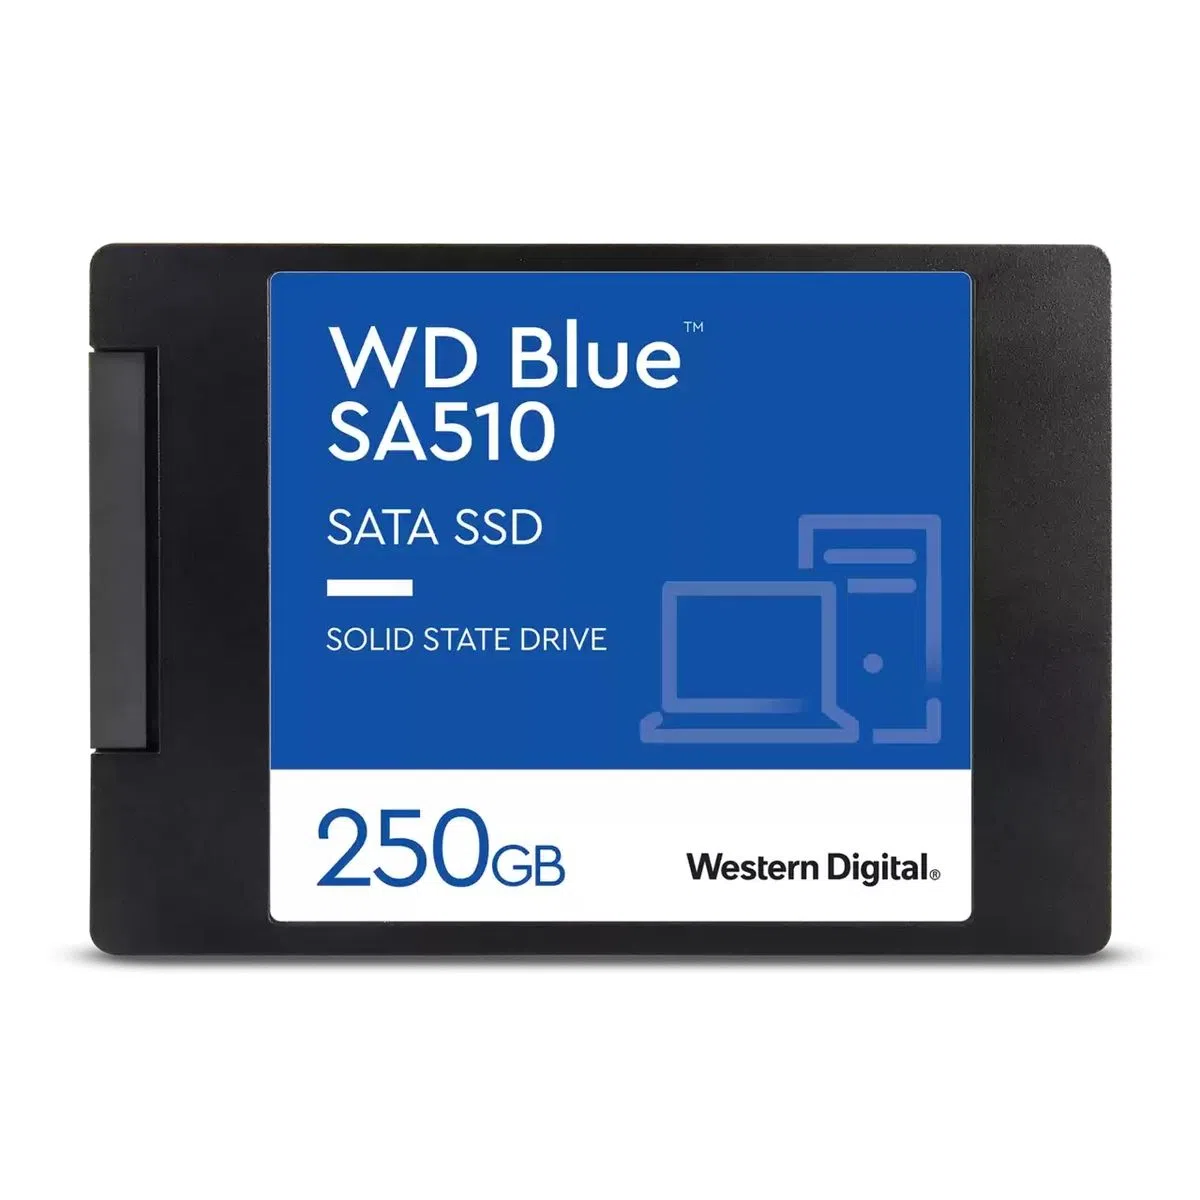 WD Blue SA510 Disque dur solide SSD 250 Go SATA 3